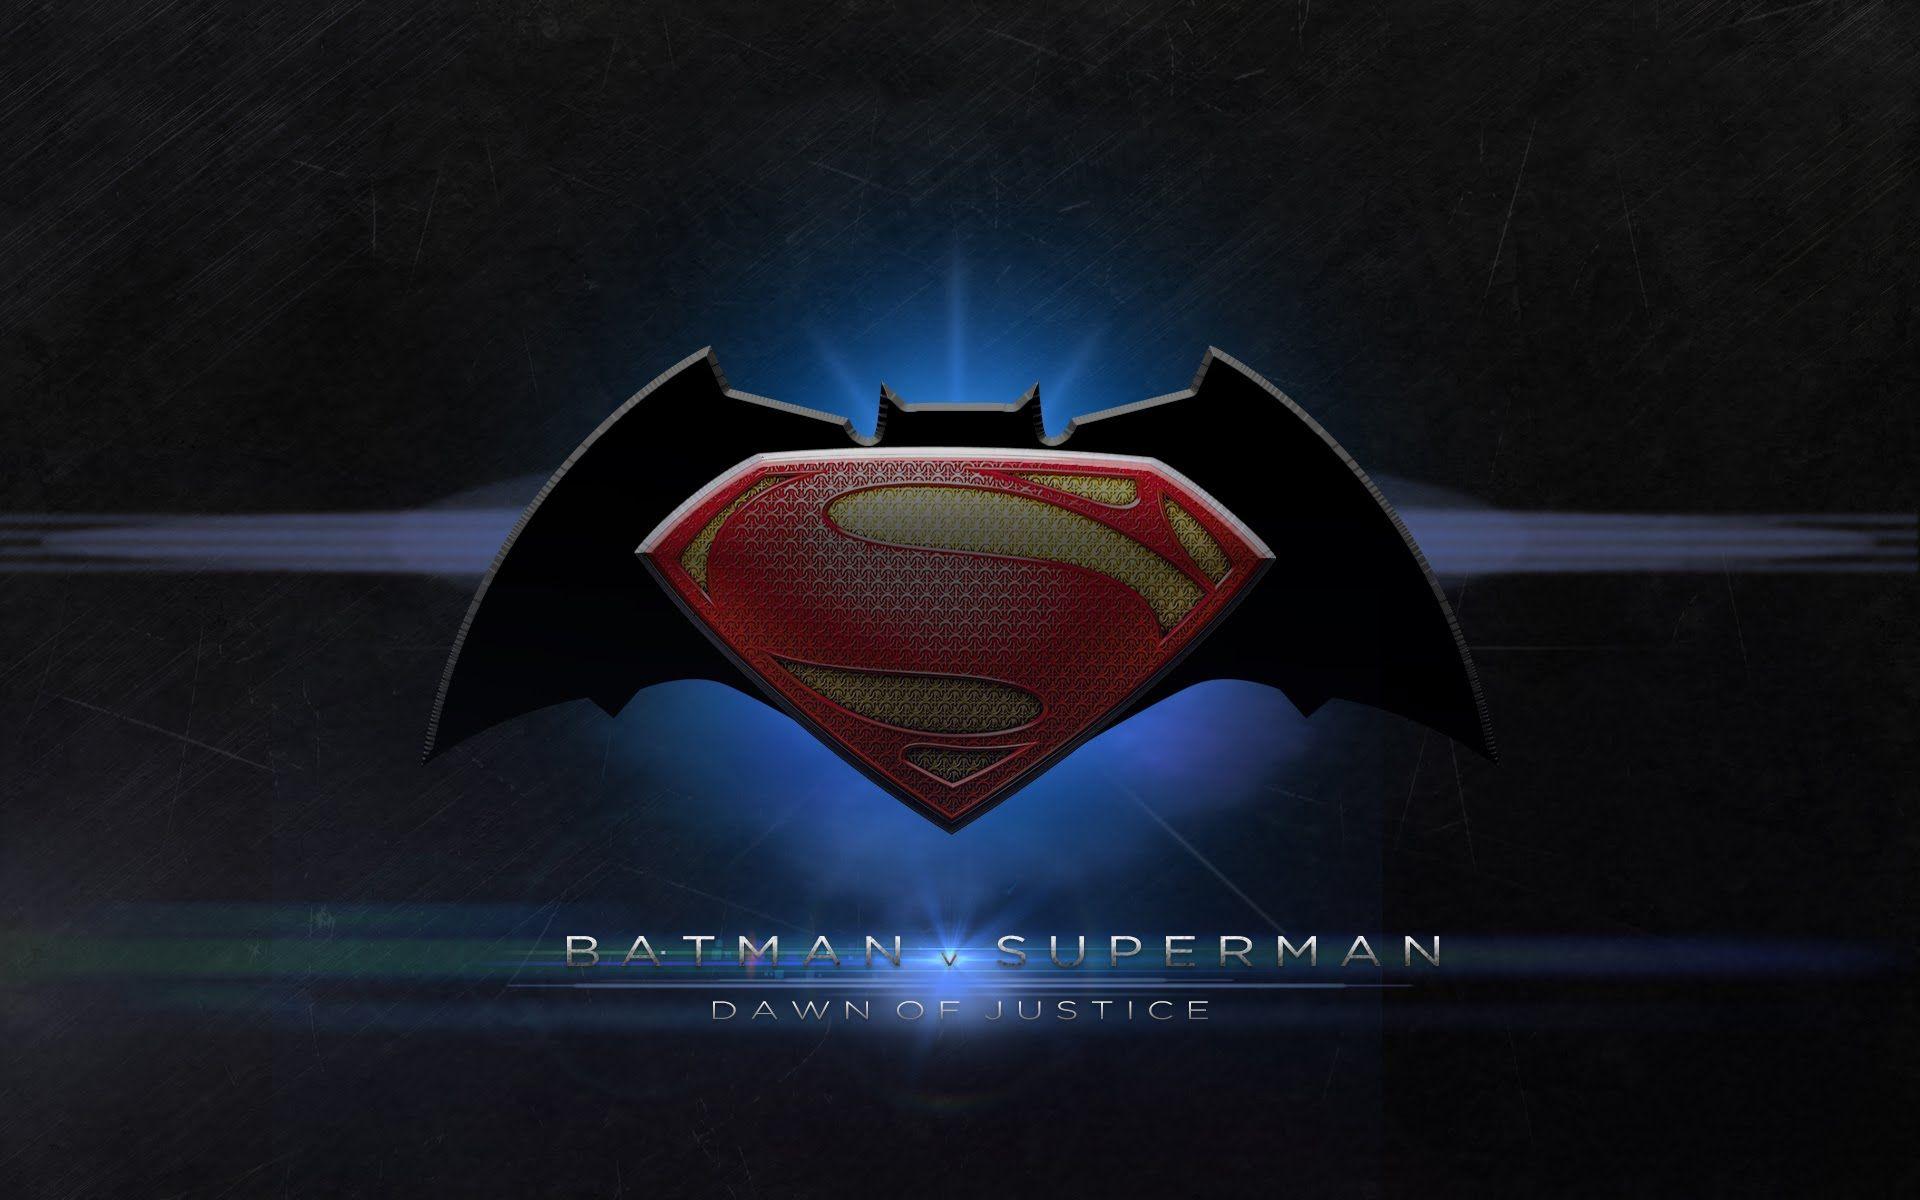 Batman v Superman logo Full HD Wallpaper